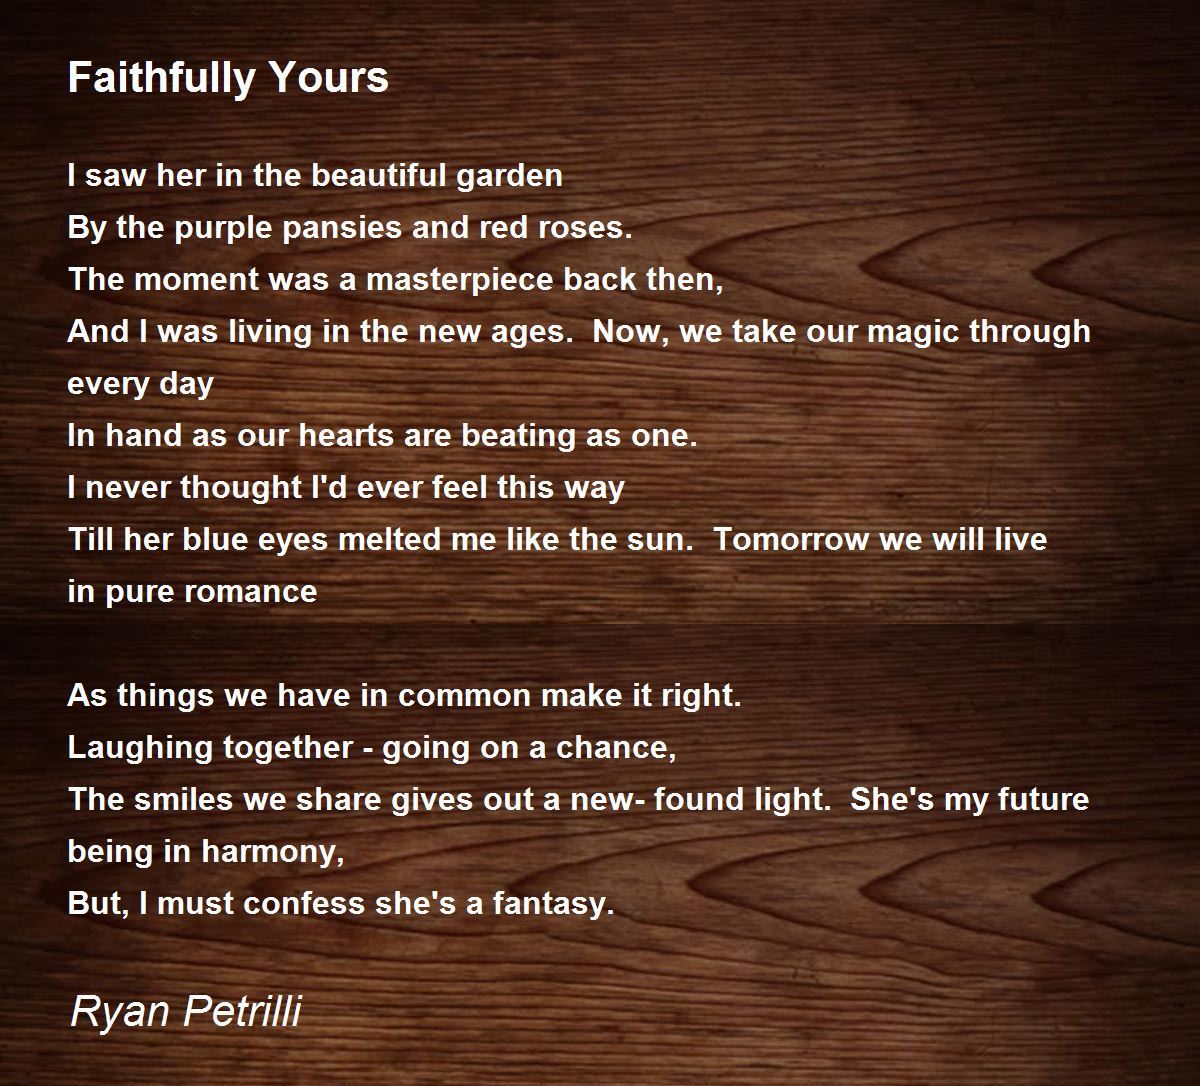 Faithfully Yours - Faithfully Yours Poem by Ryan Petrilli